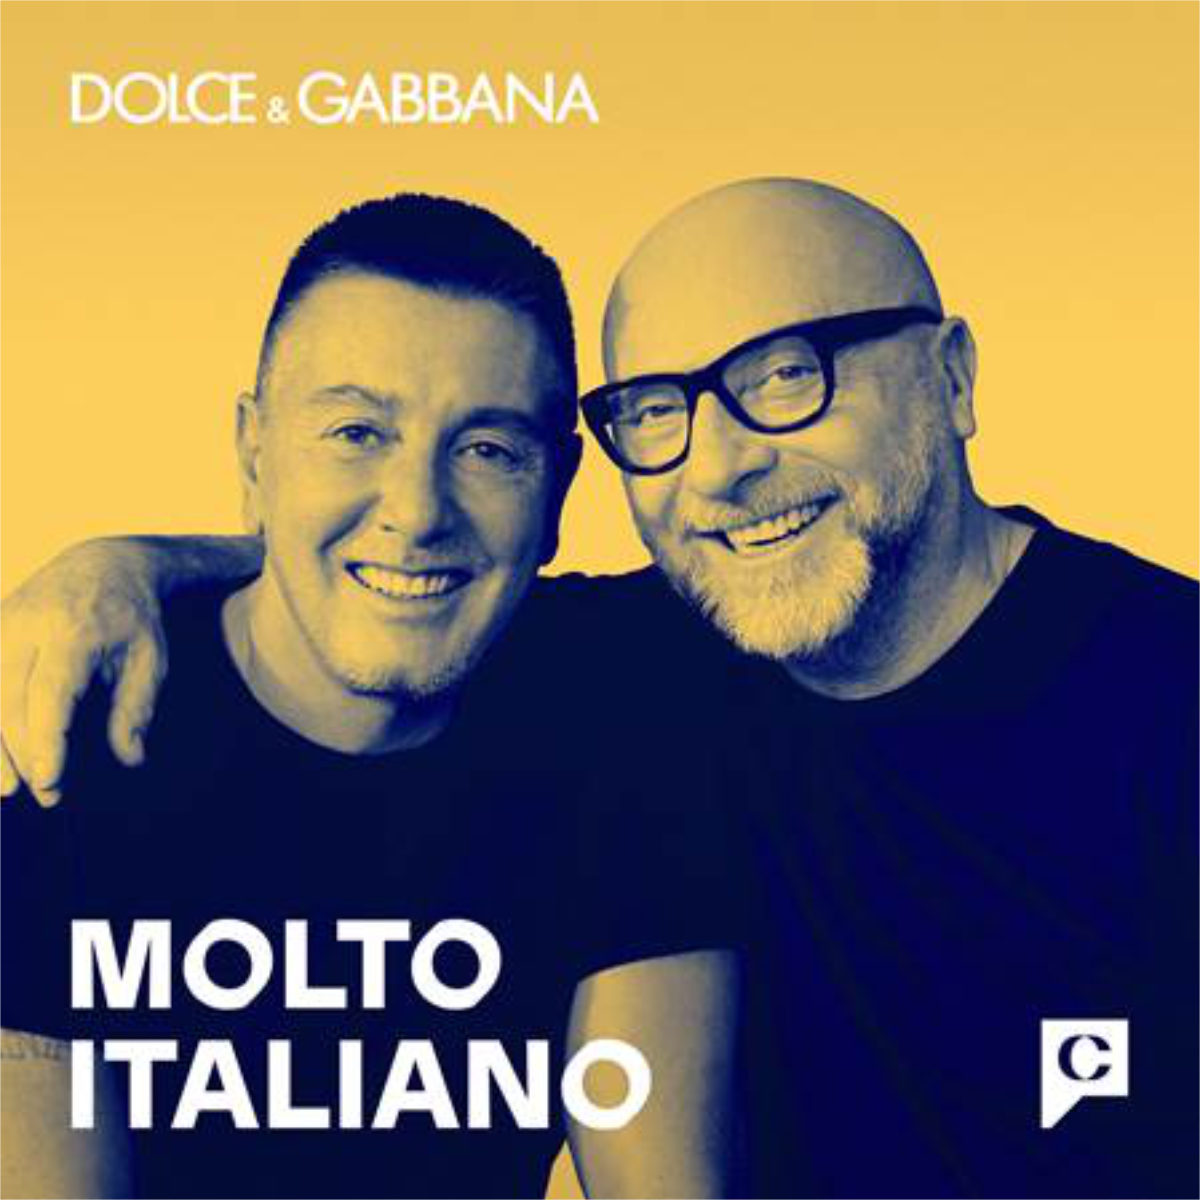 MOLTO ITALIANO: The New Podcast Series By Dolce&Gabbana